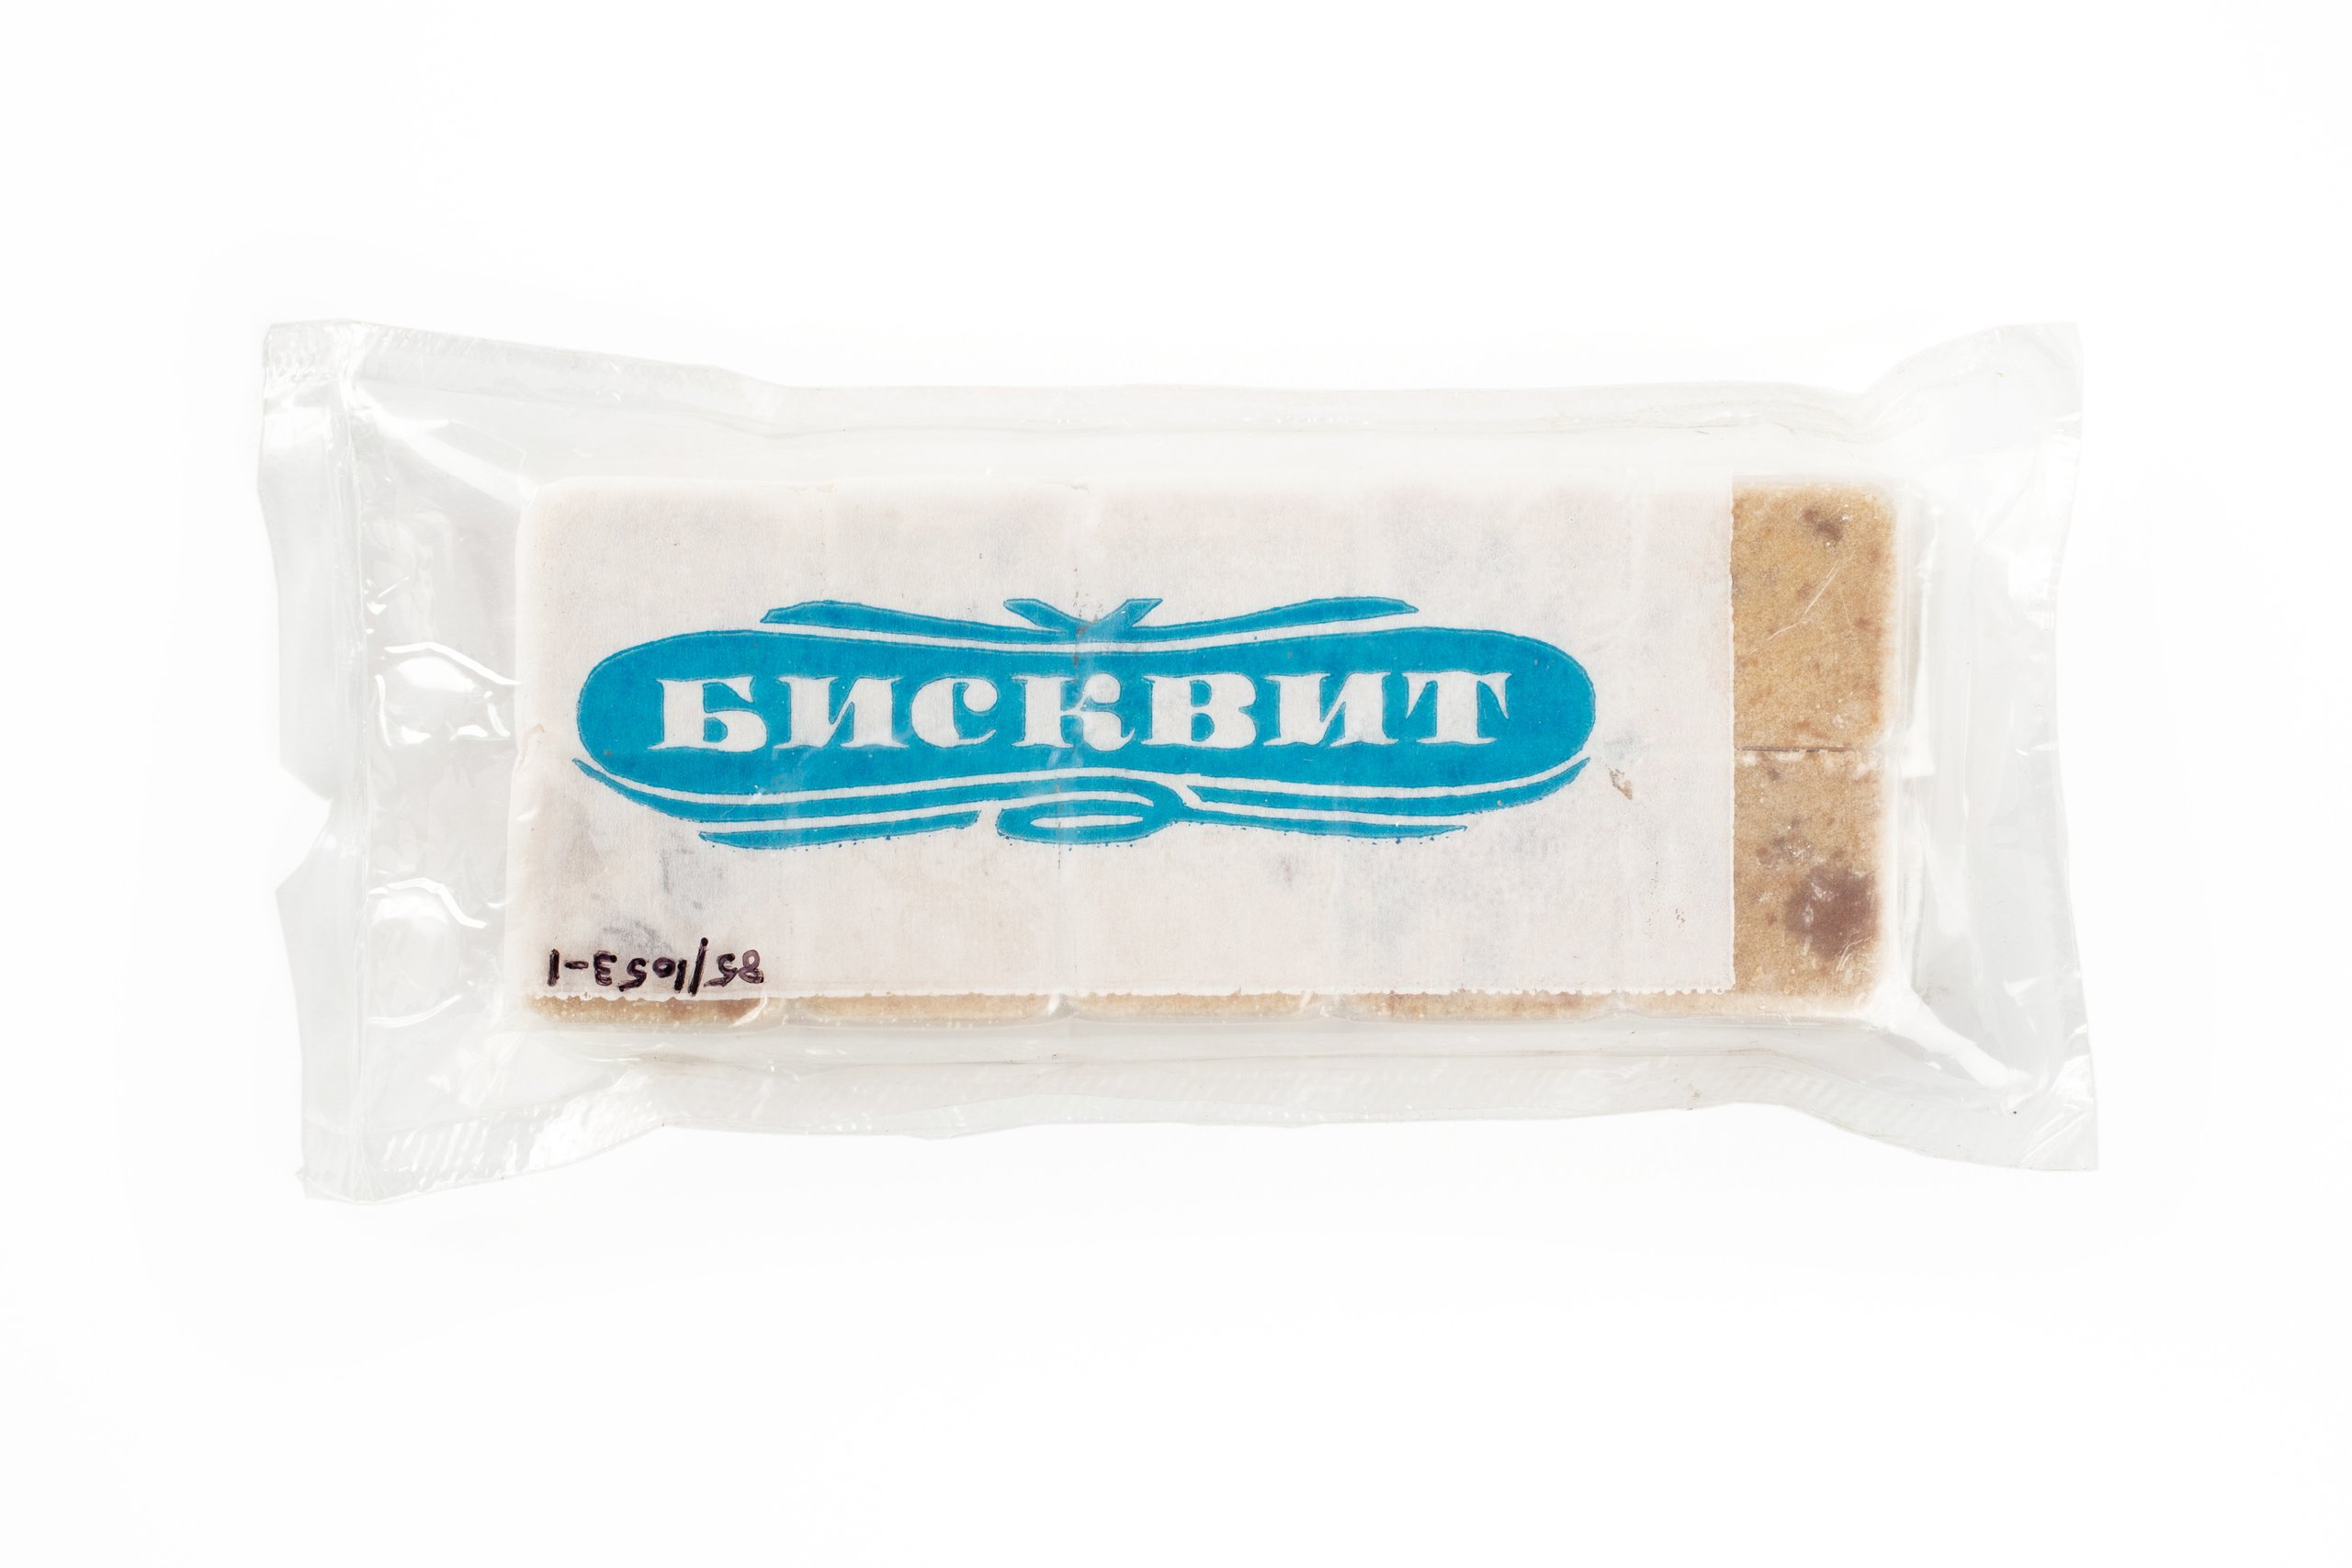 Space food package of biscuit